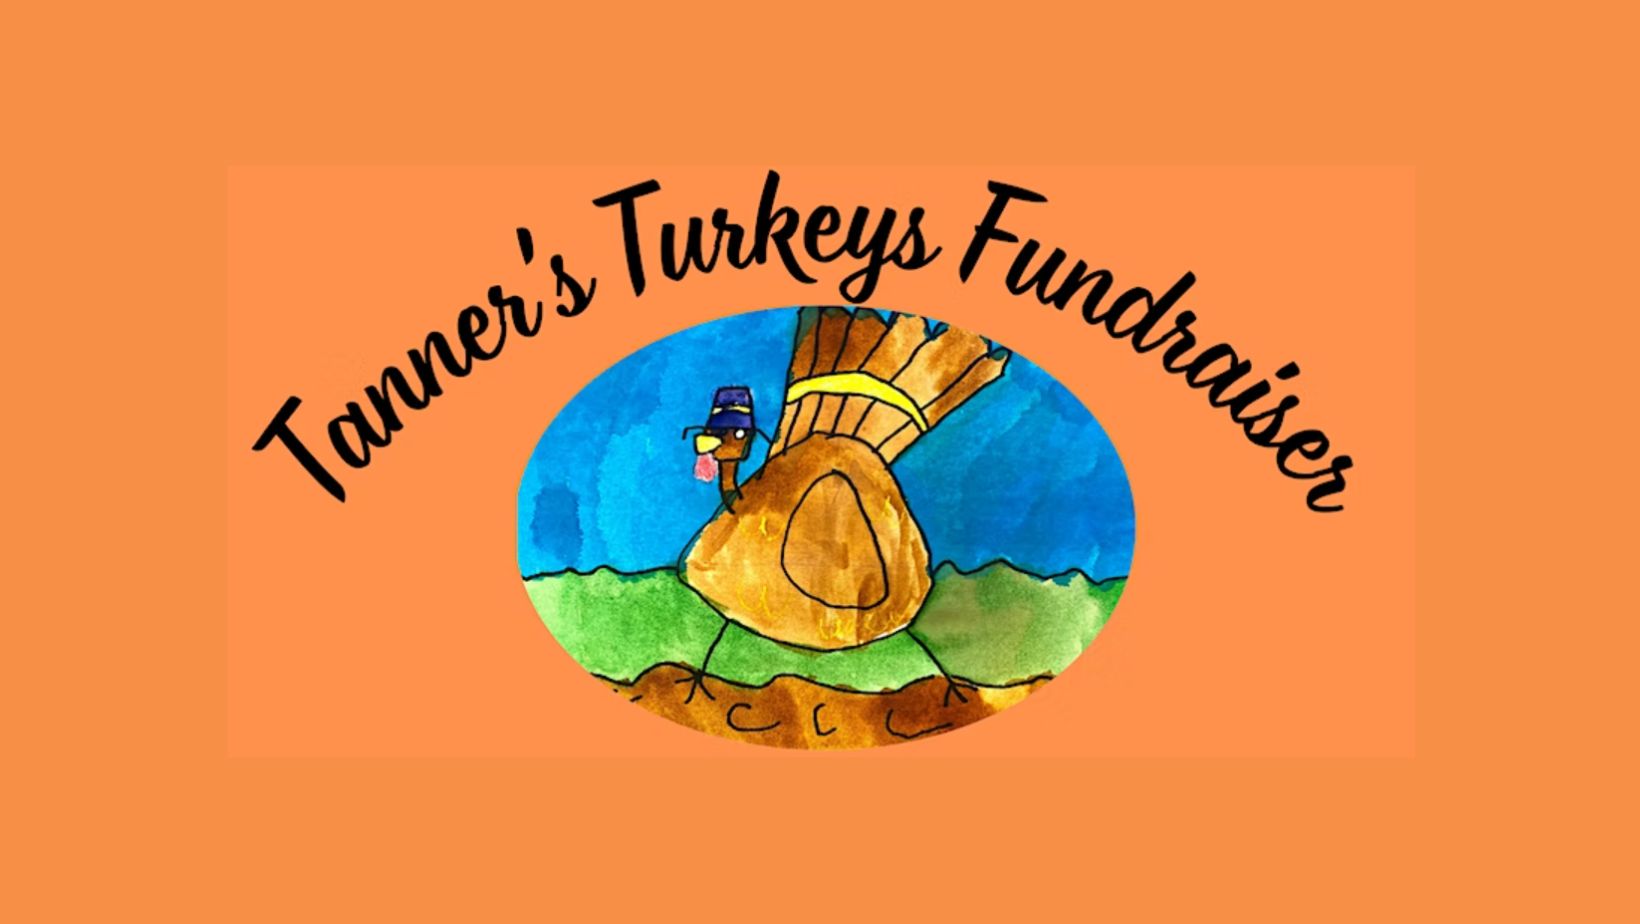 Tanners Turkey